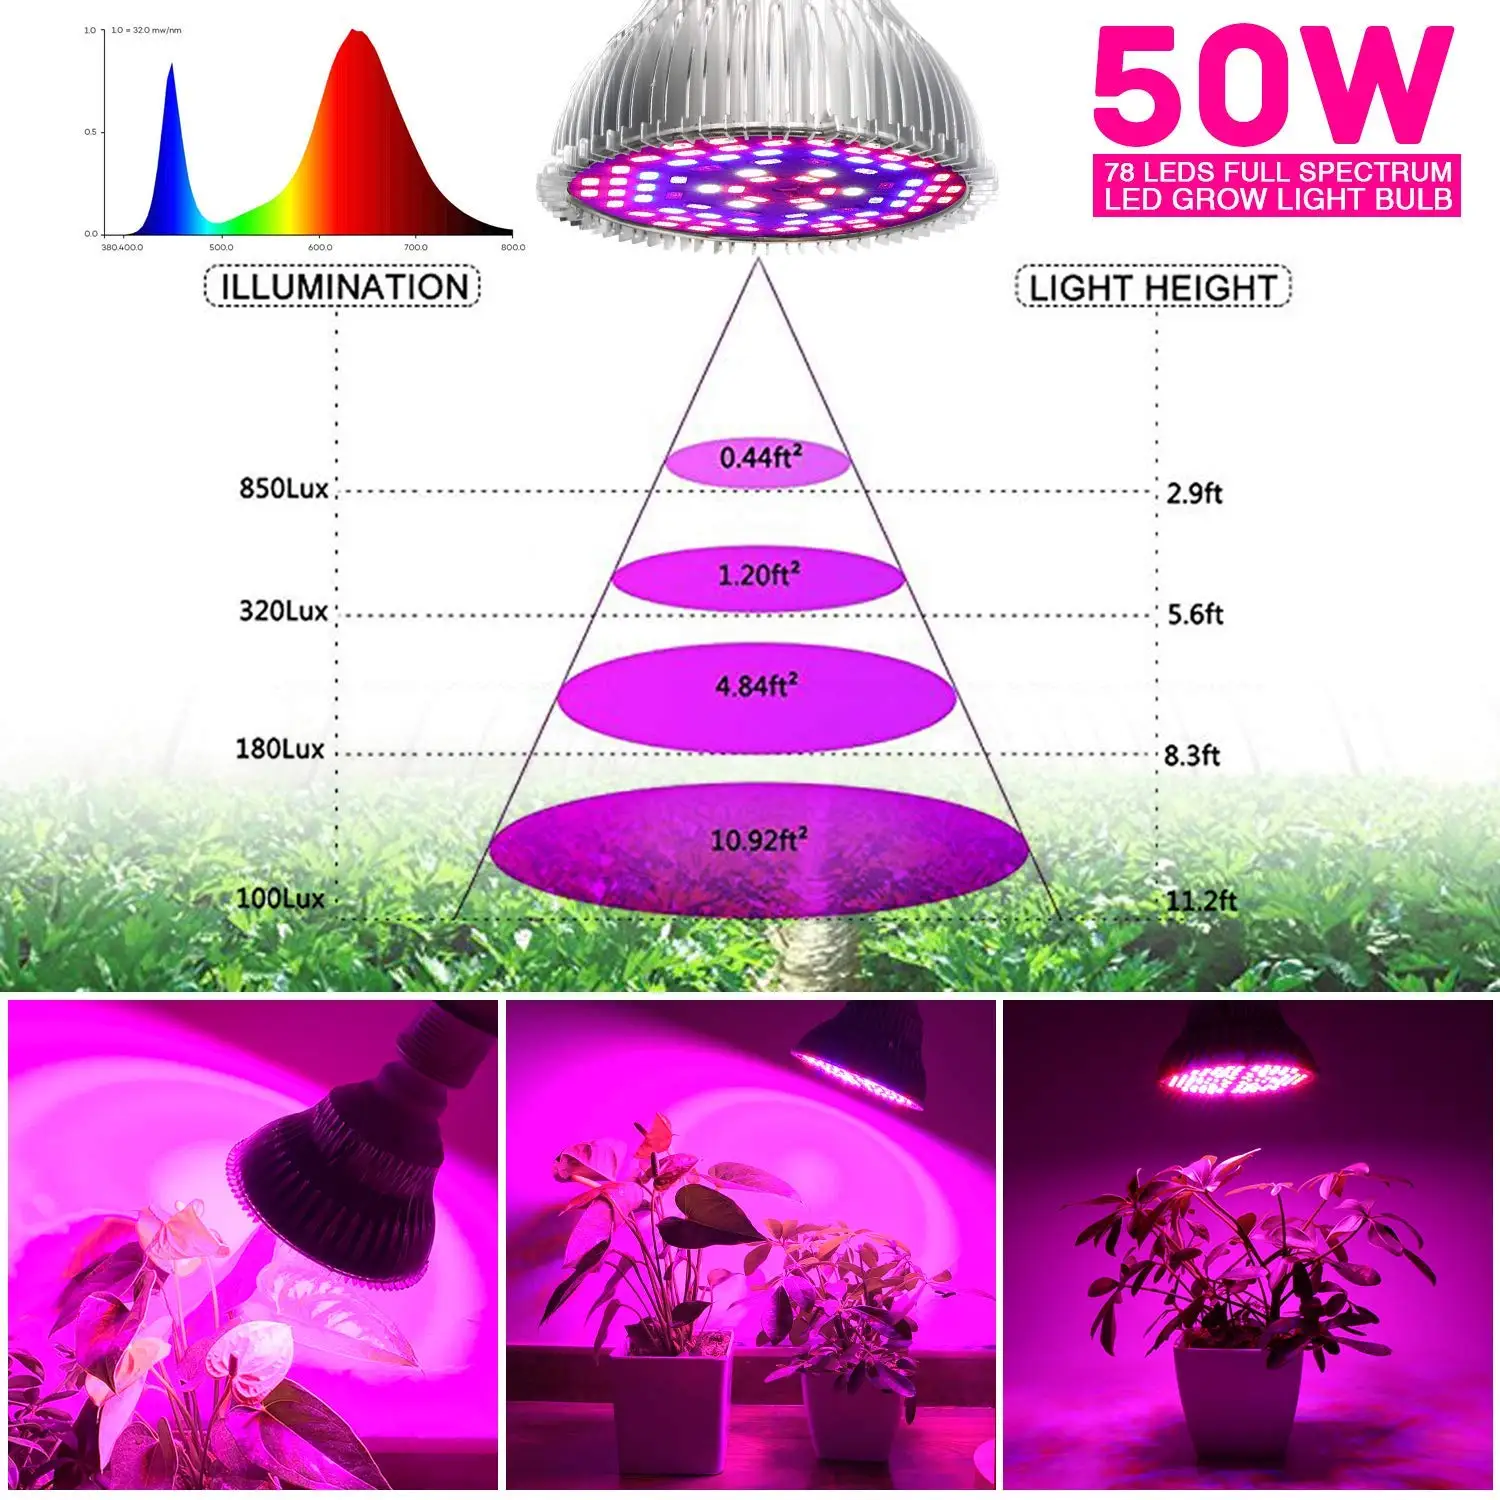 50W LED Grow Light Bulb Full Spectrum Lamp for Hydroponic Indoor Plant Flower 